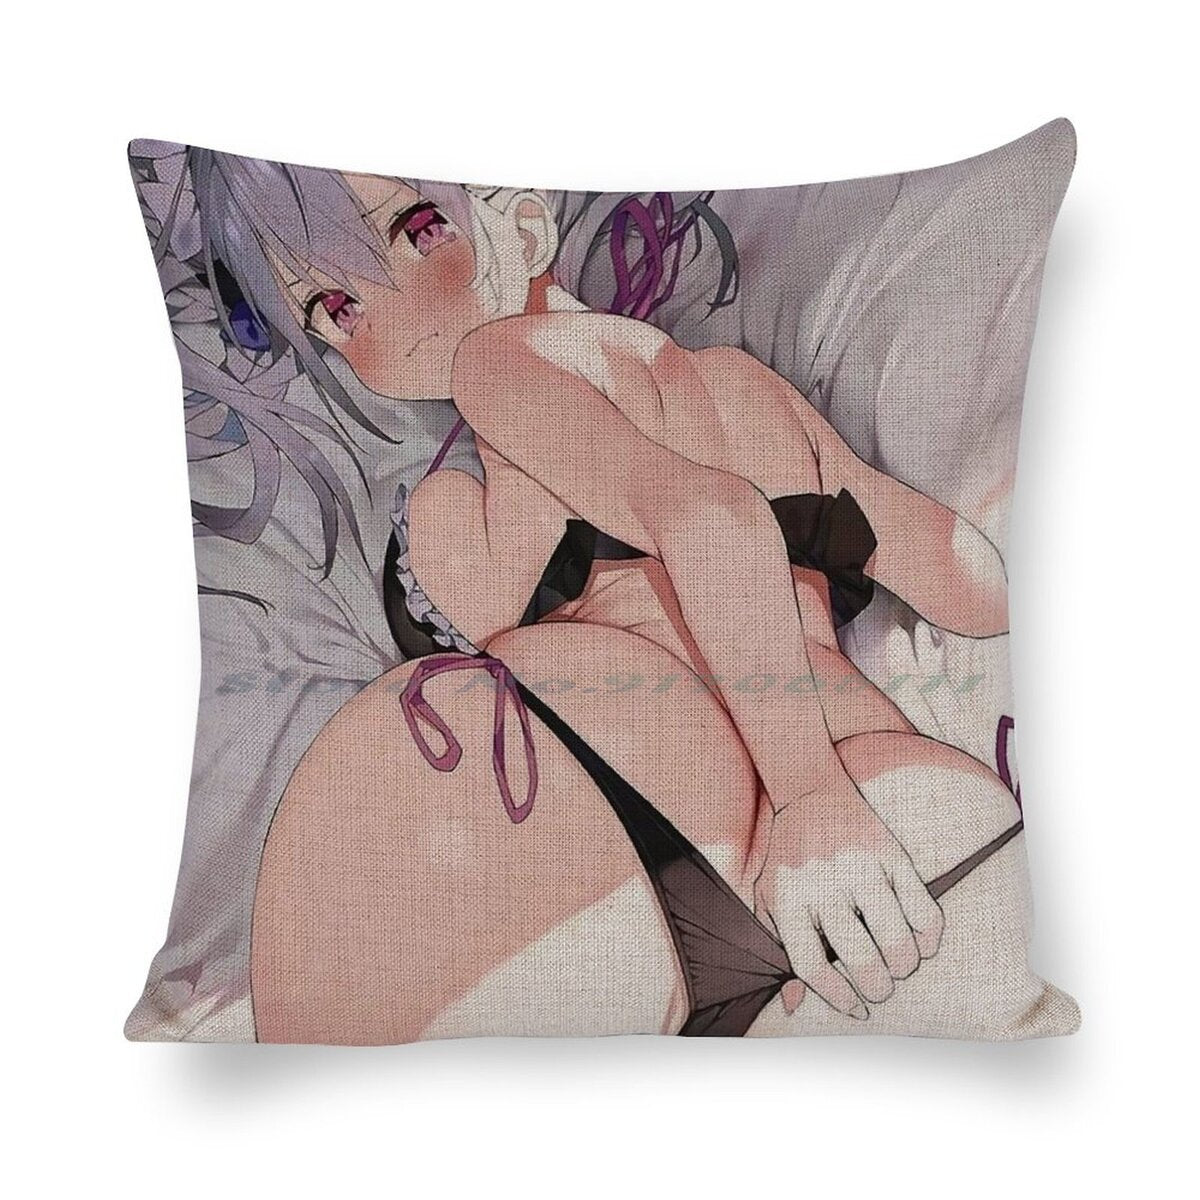 MAOKEI - 3D Hentai Original Character Pillow Case - 1005003008611326-Polyester-30x30cm 12x12in